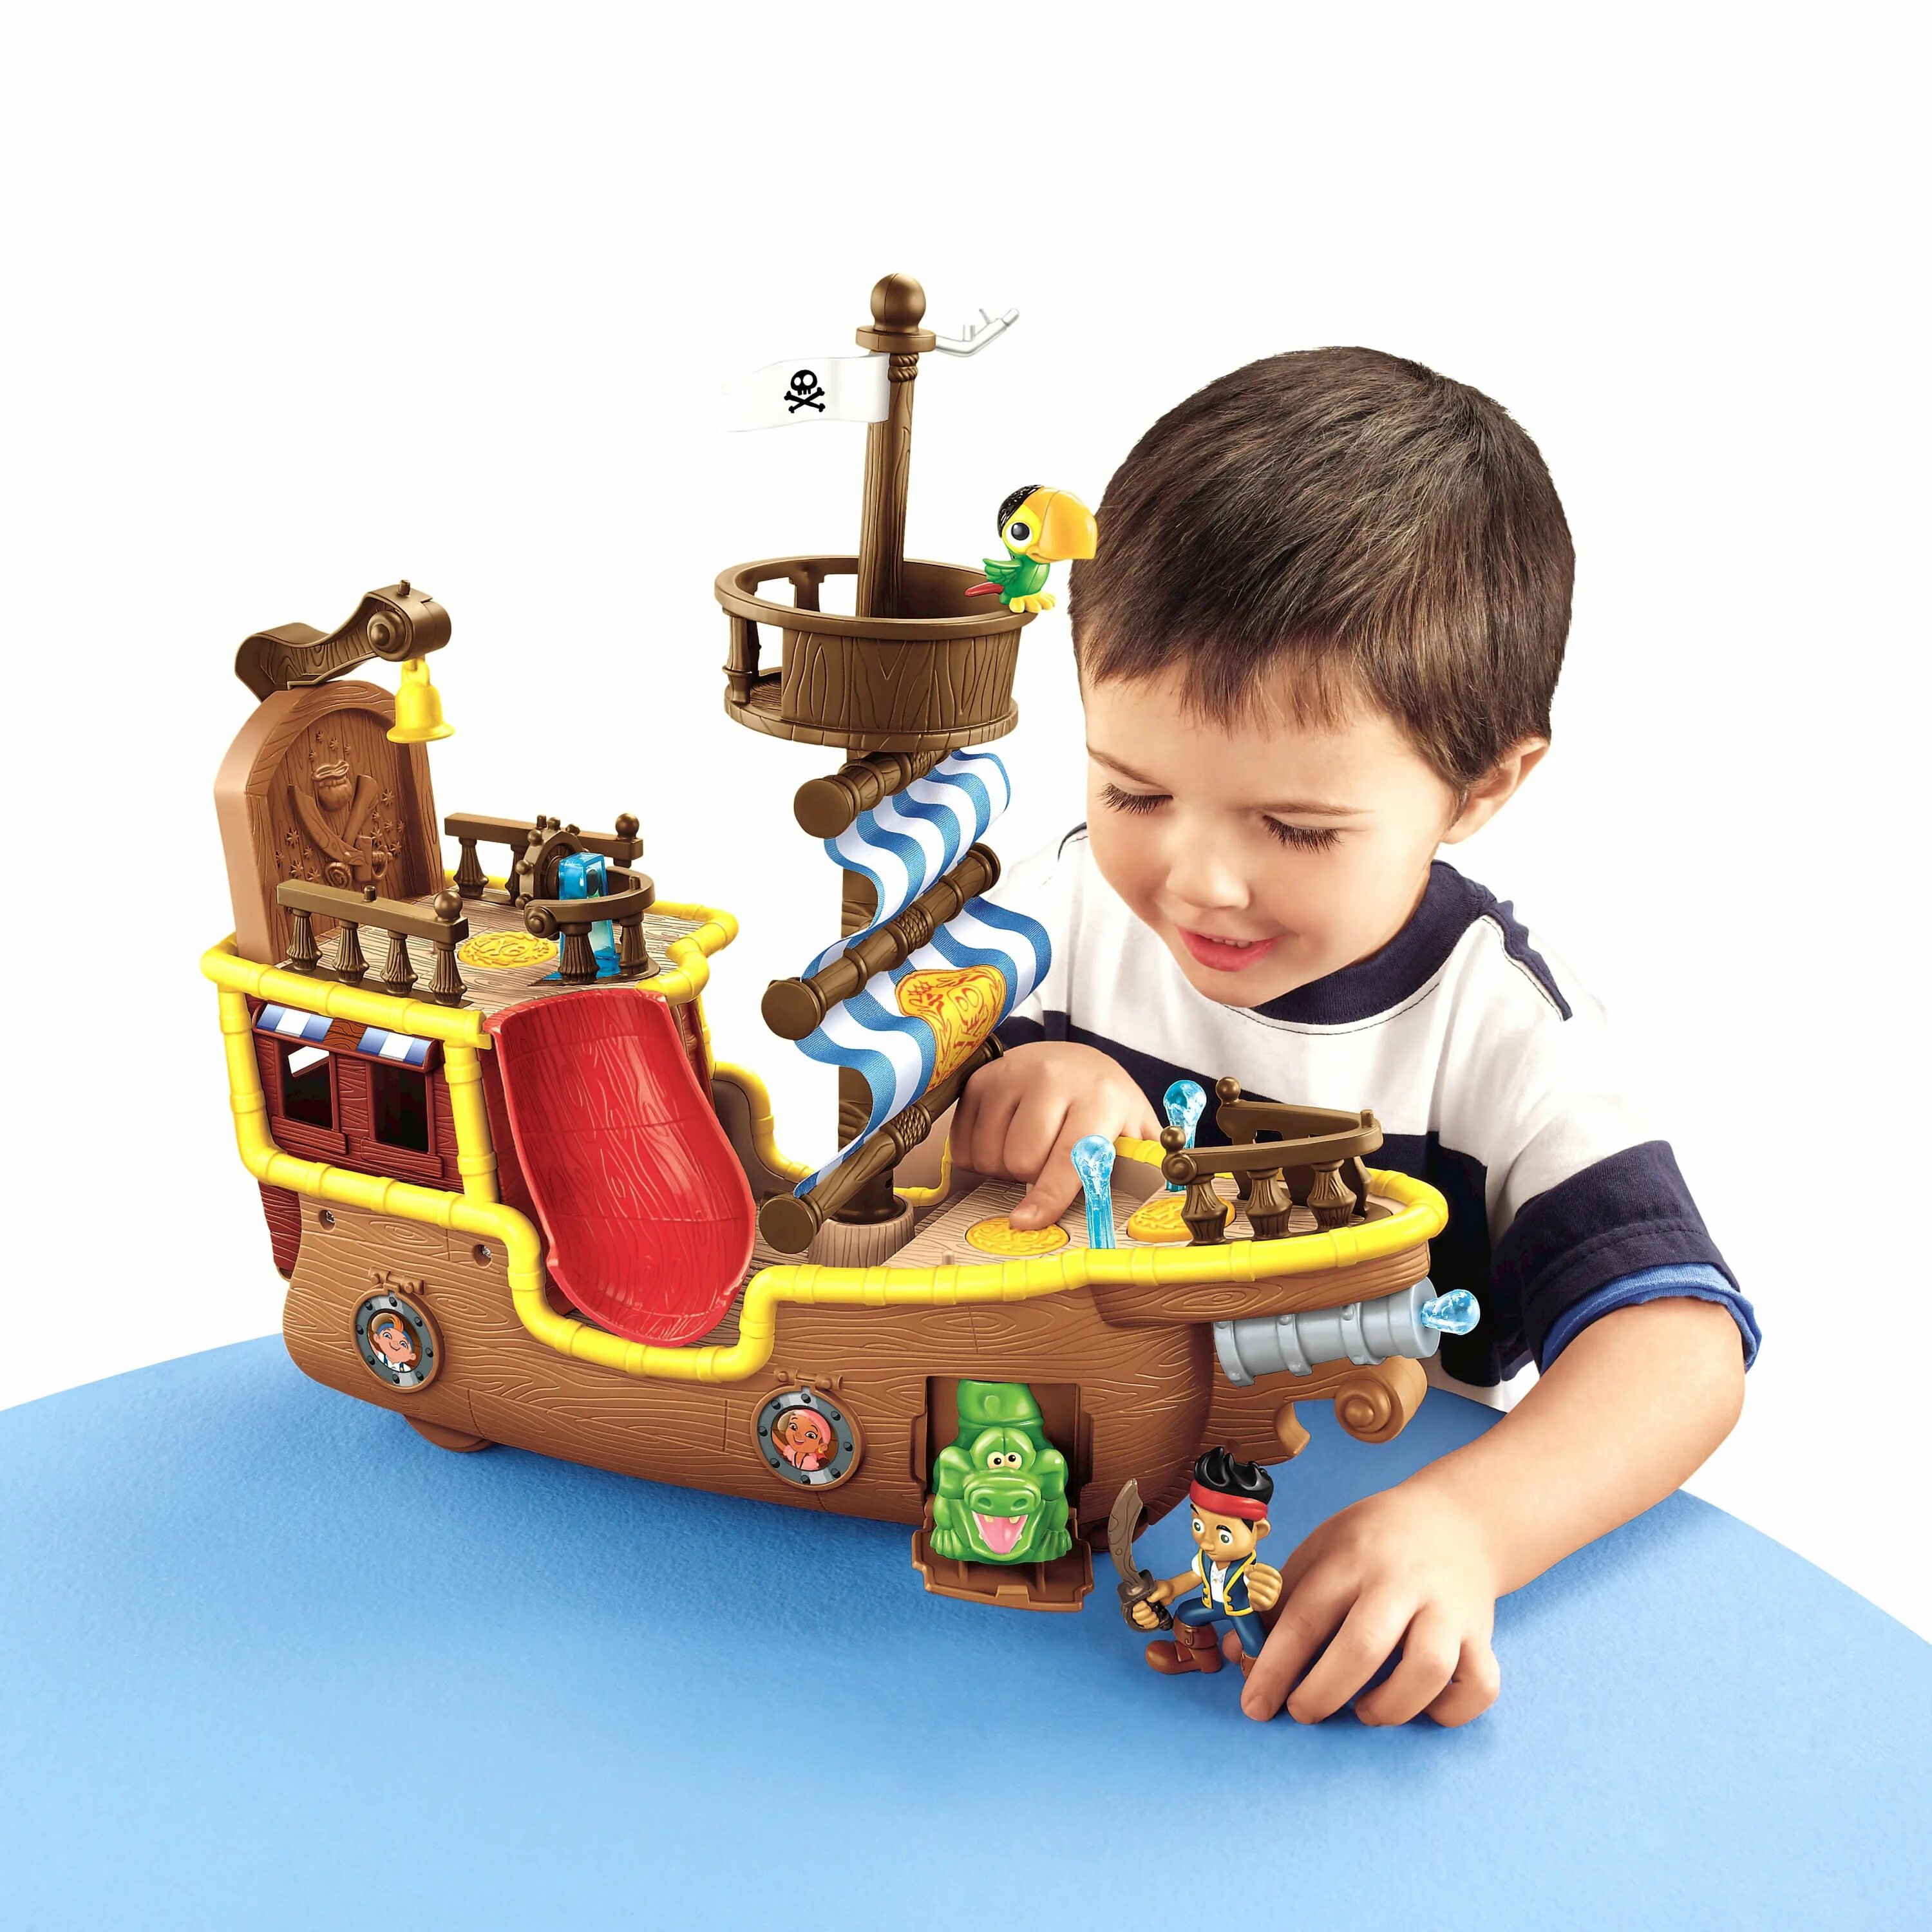 Jake and the Neverland Pirates игрушки. Пираты Нетландии корабль. Пиратский корабль Fisher Price. Пиратский корабль игрушка Fisher Price.